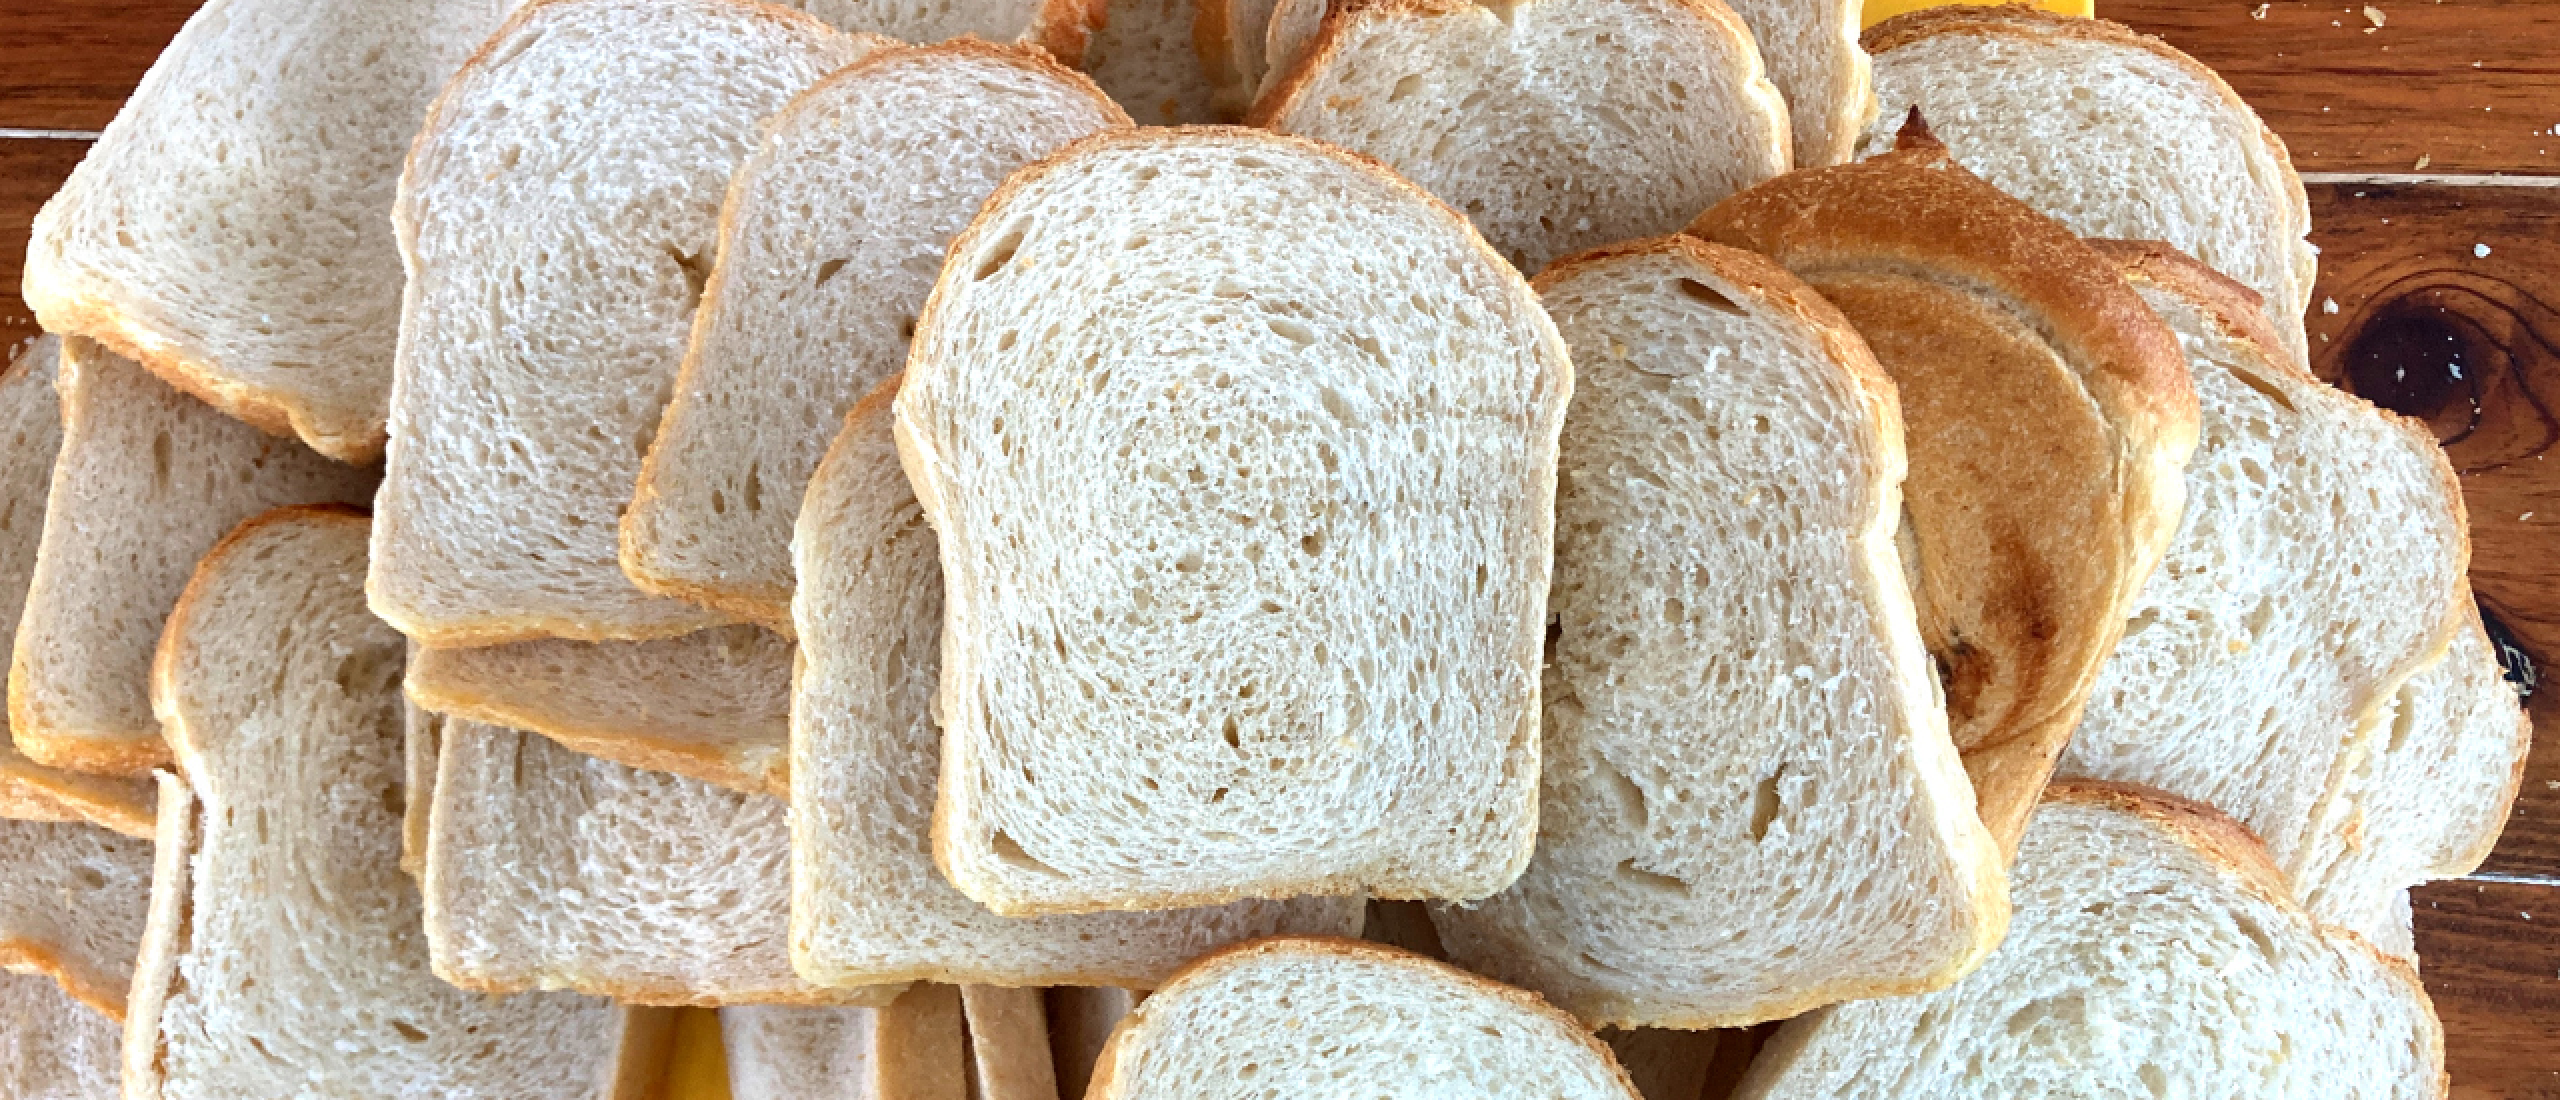 Hoe maak je luchtig wit brood?